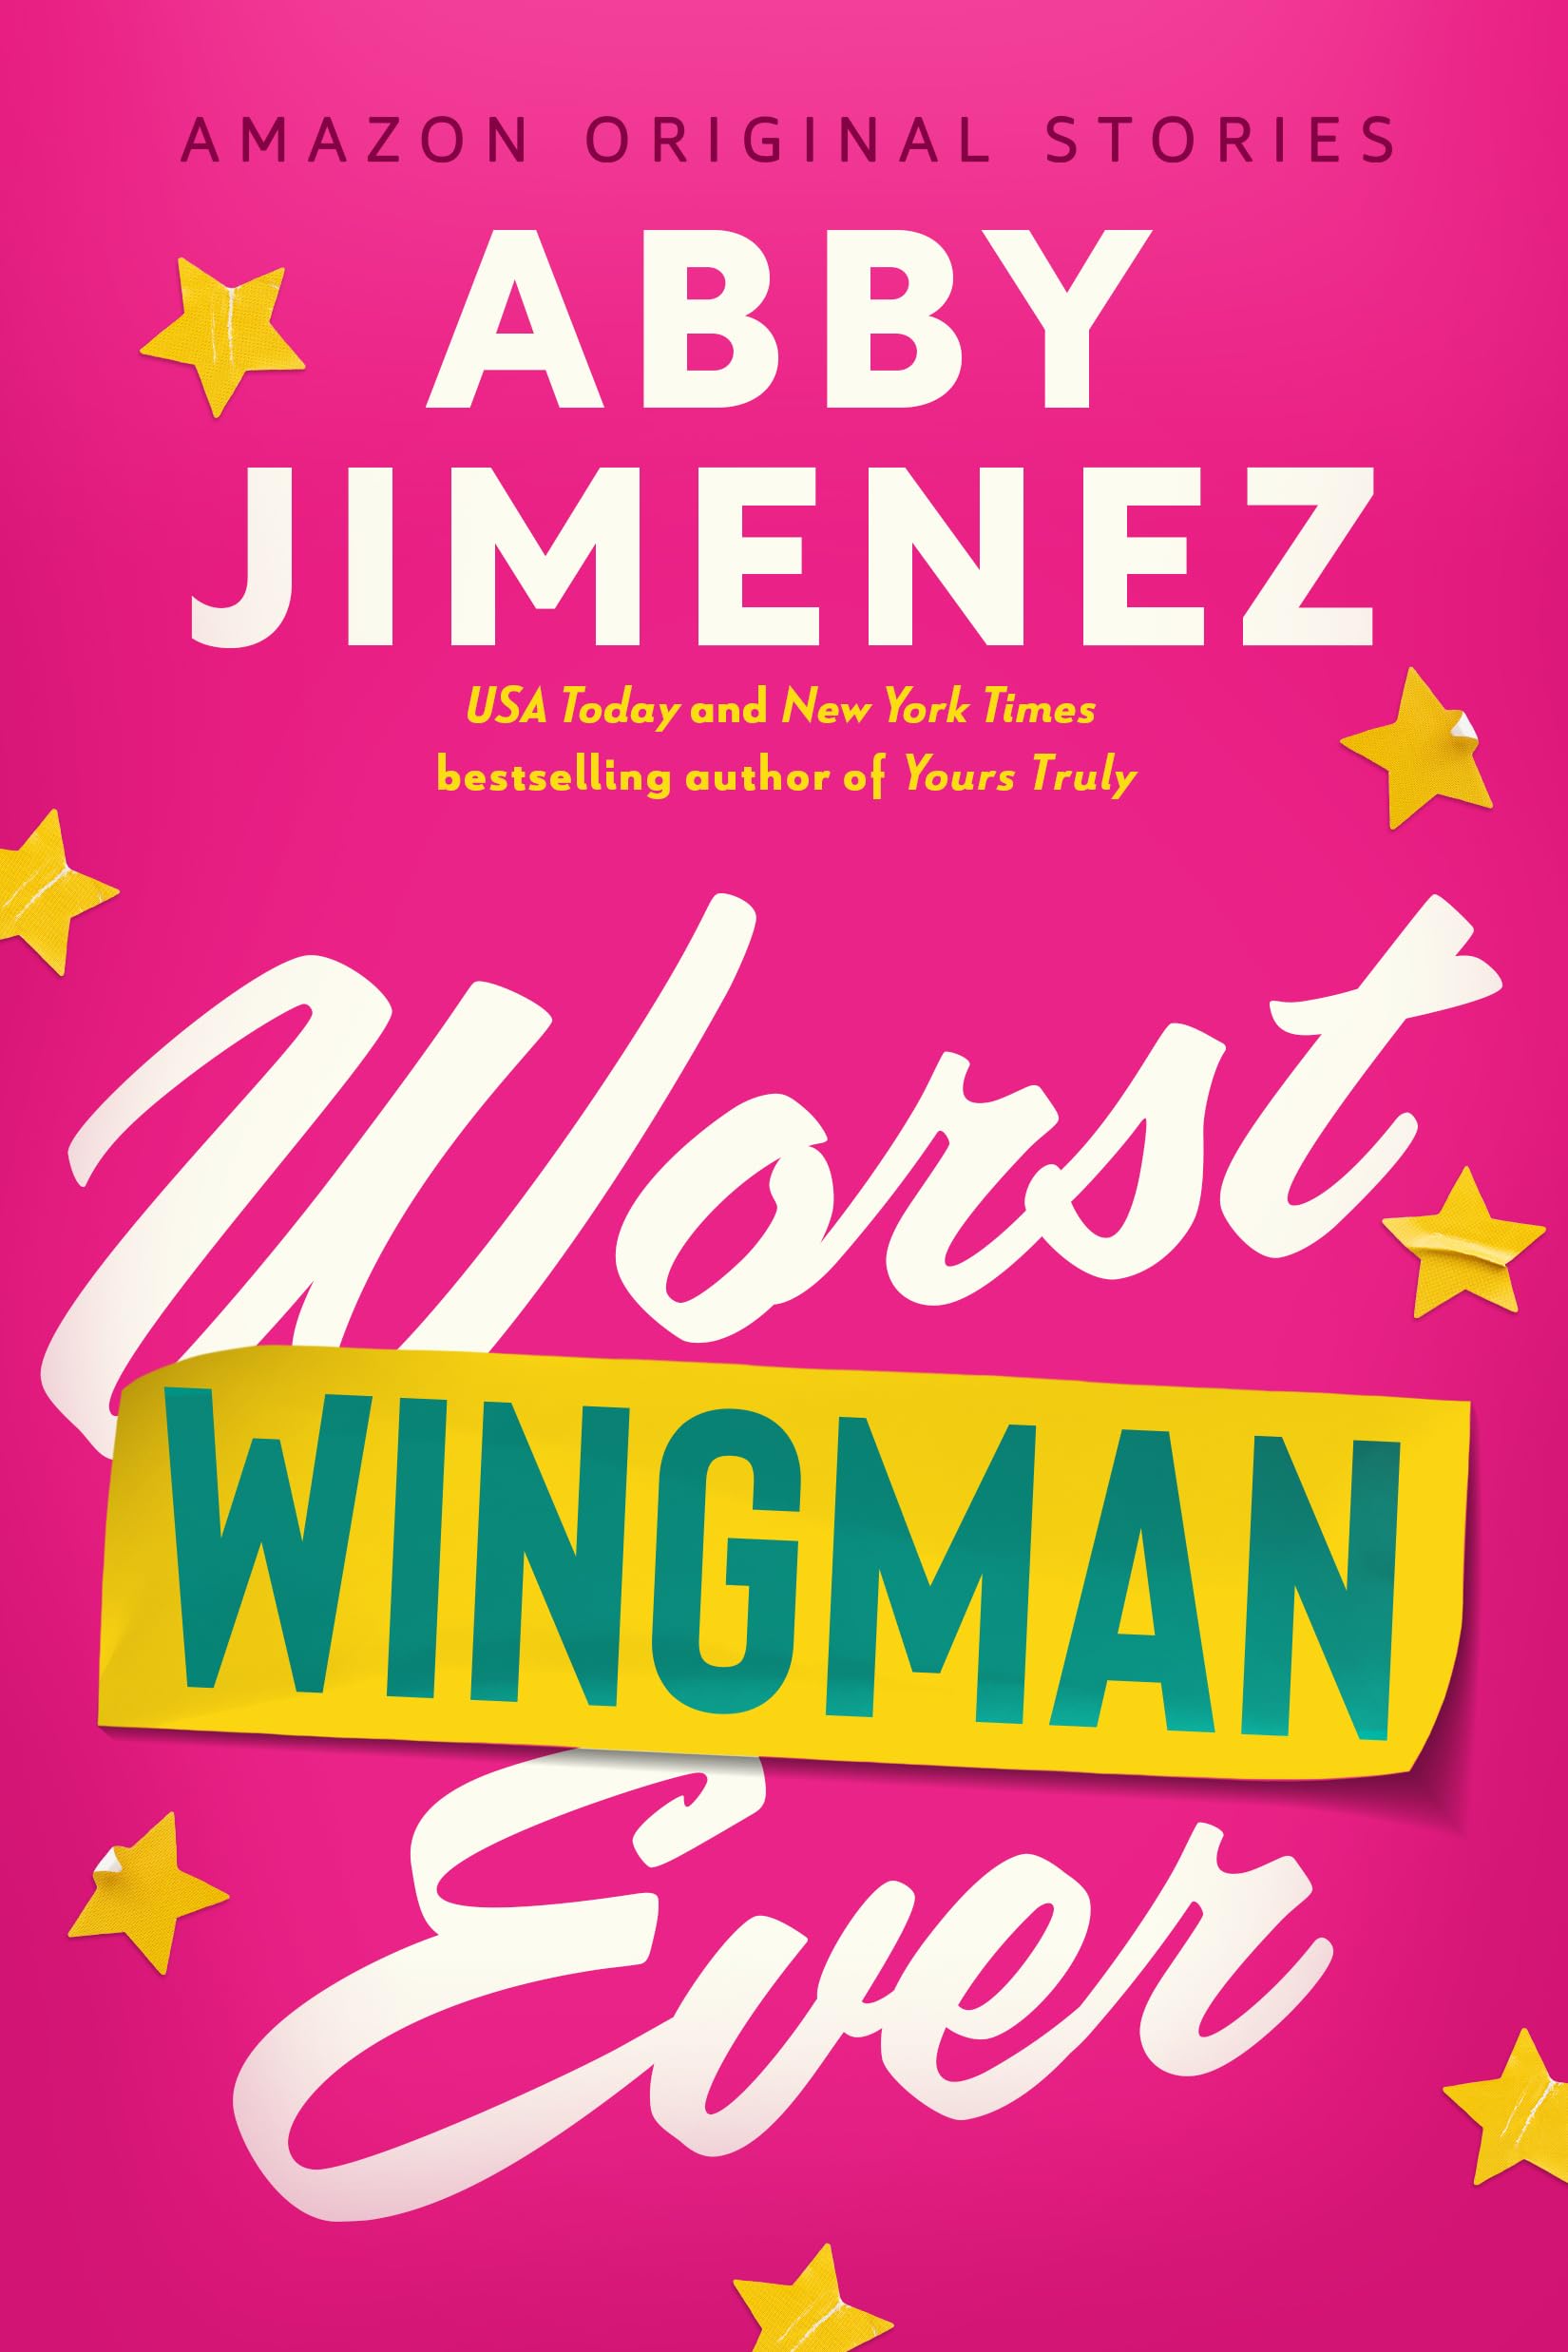 Worst Wingman Ever (The Improbable Meet-Cute)